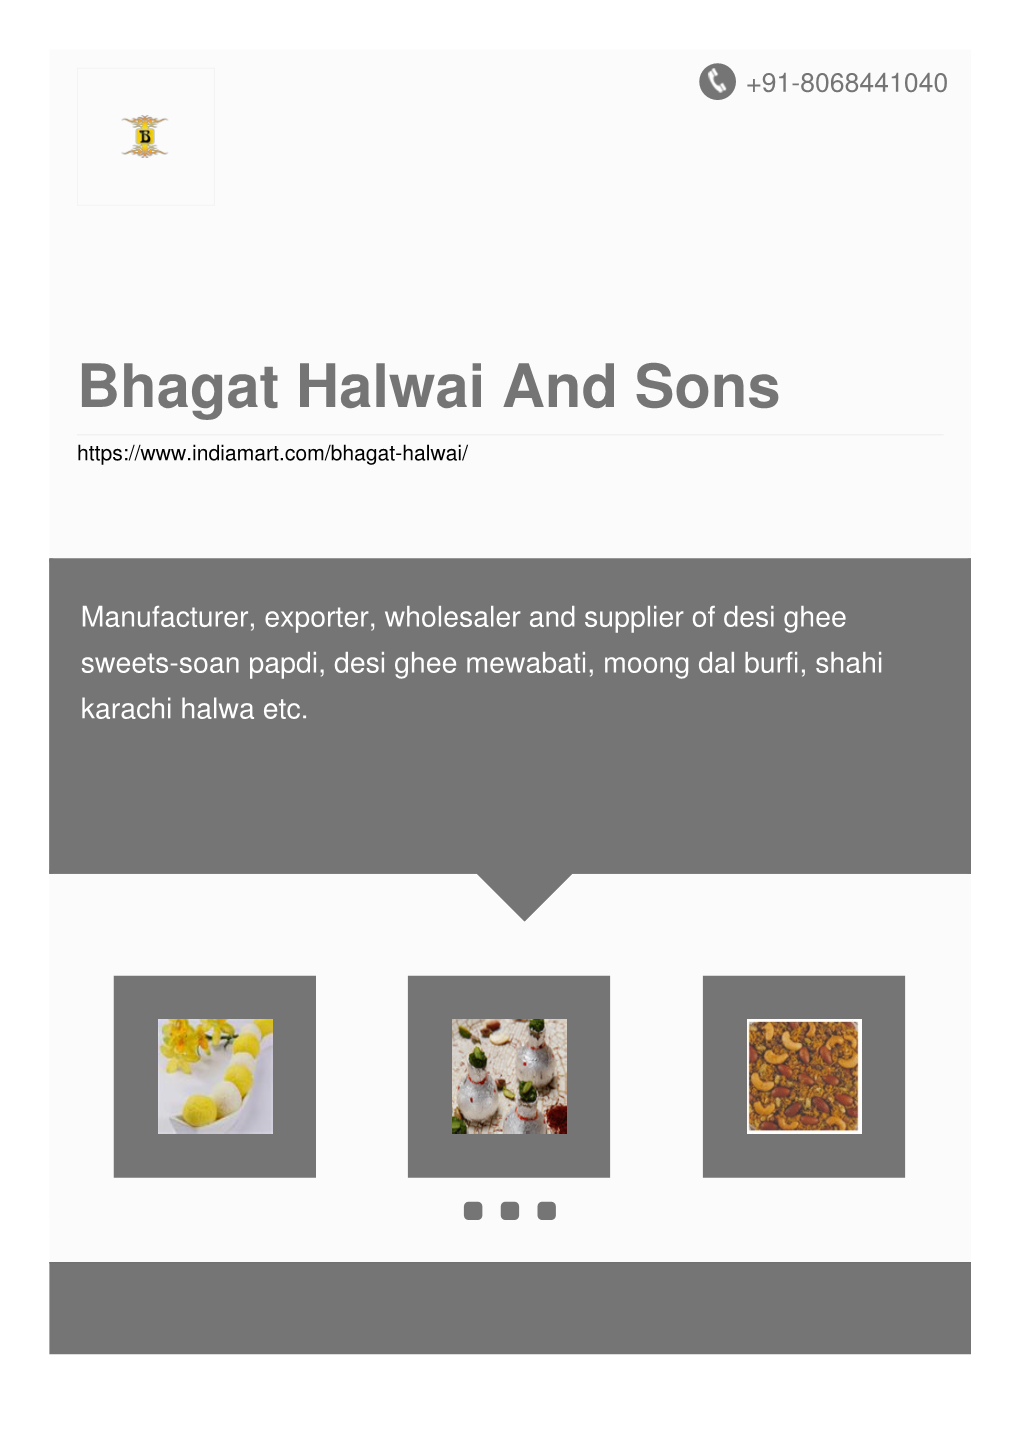 Bhagat Halwai and Sons